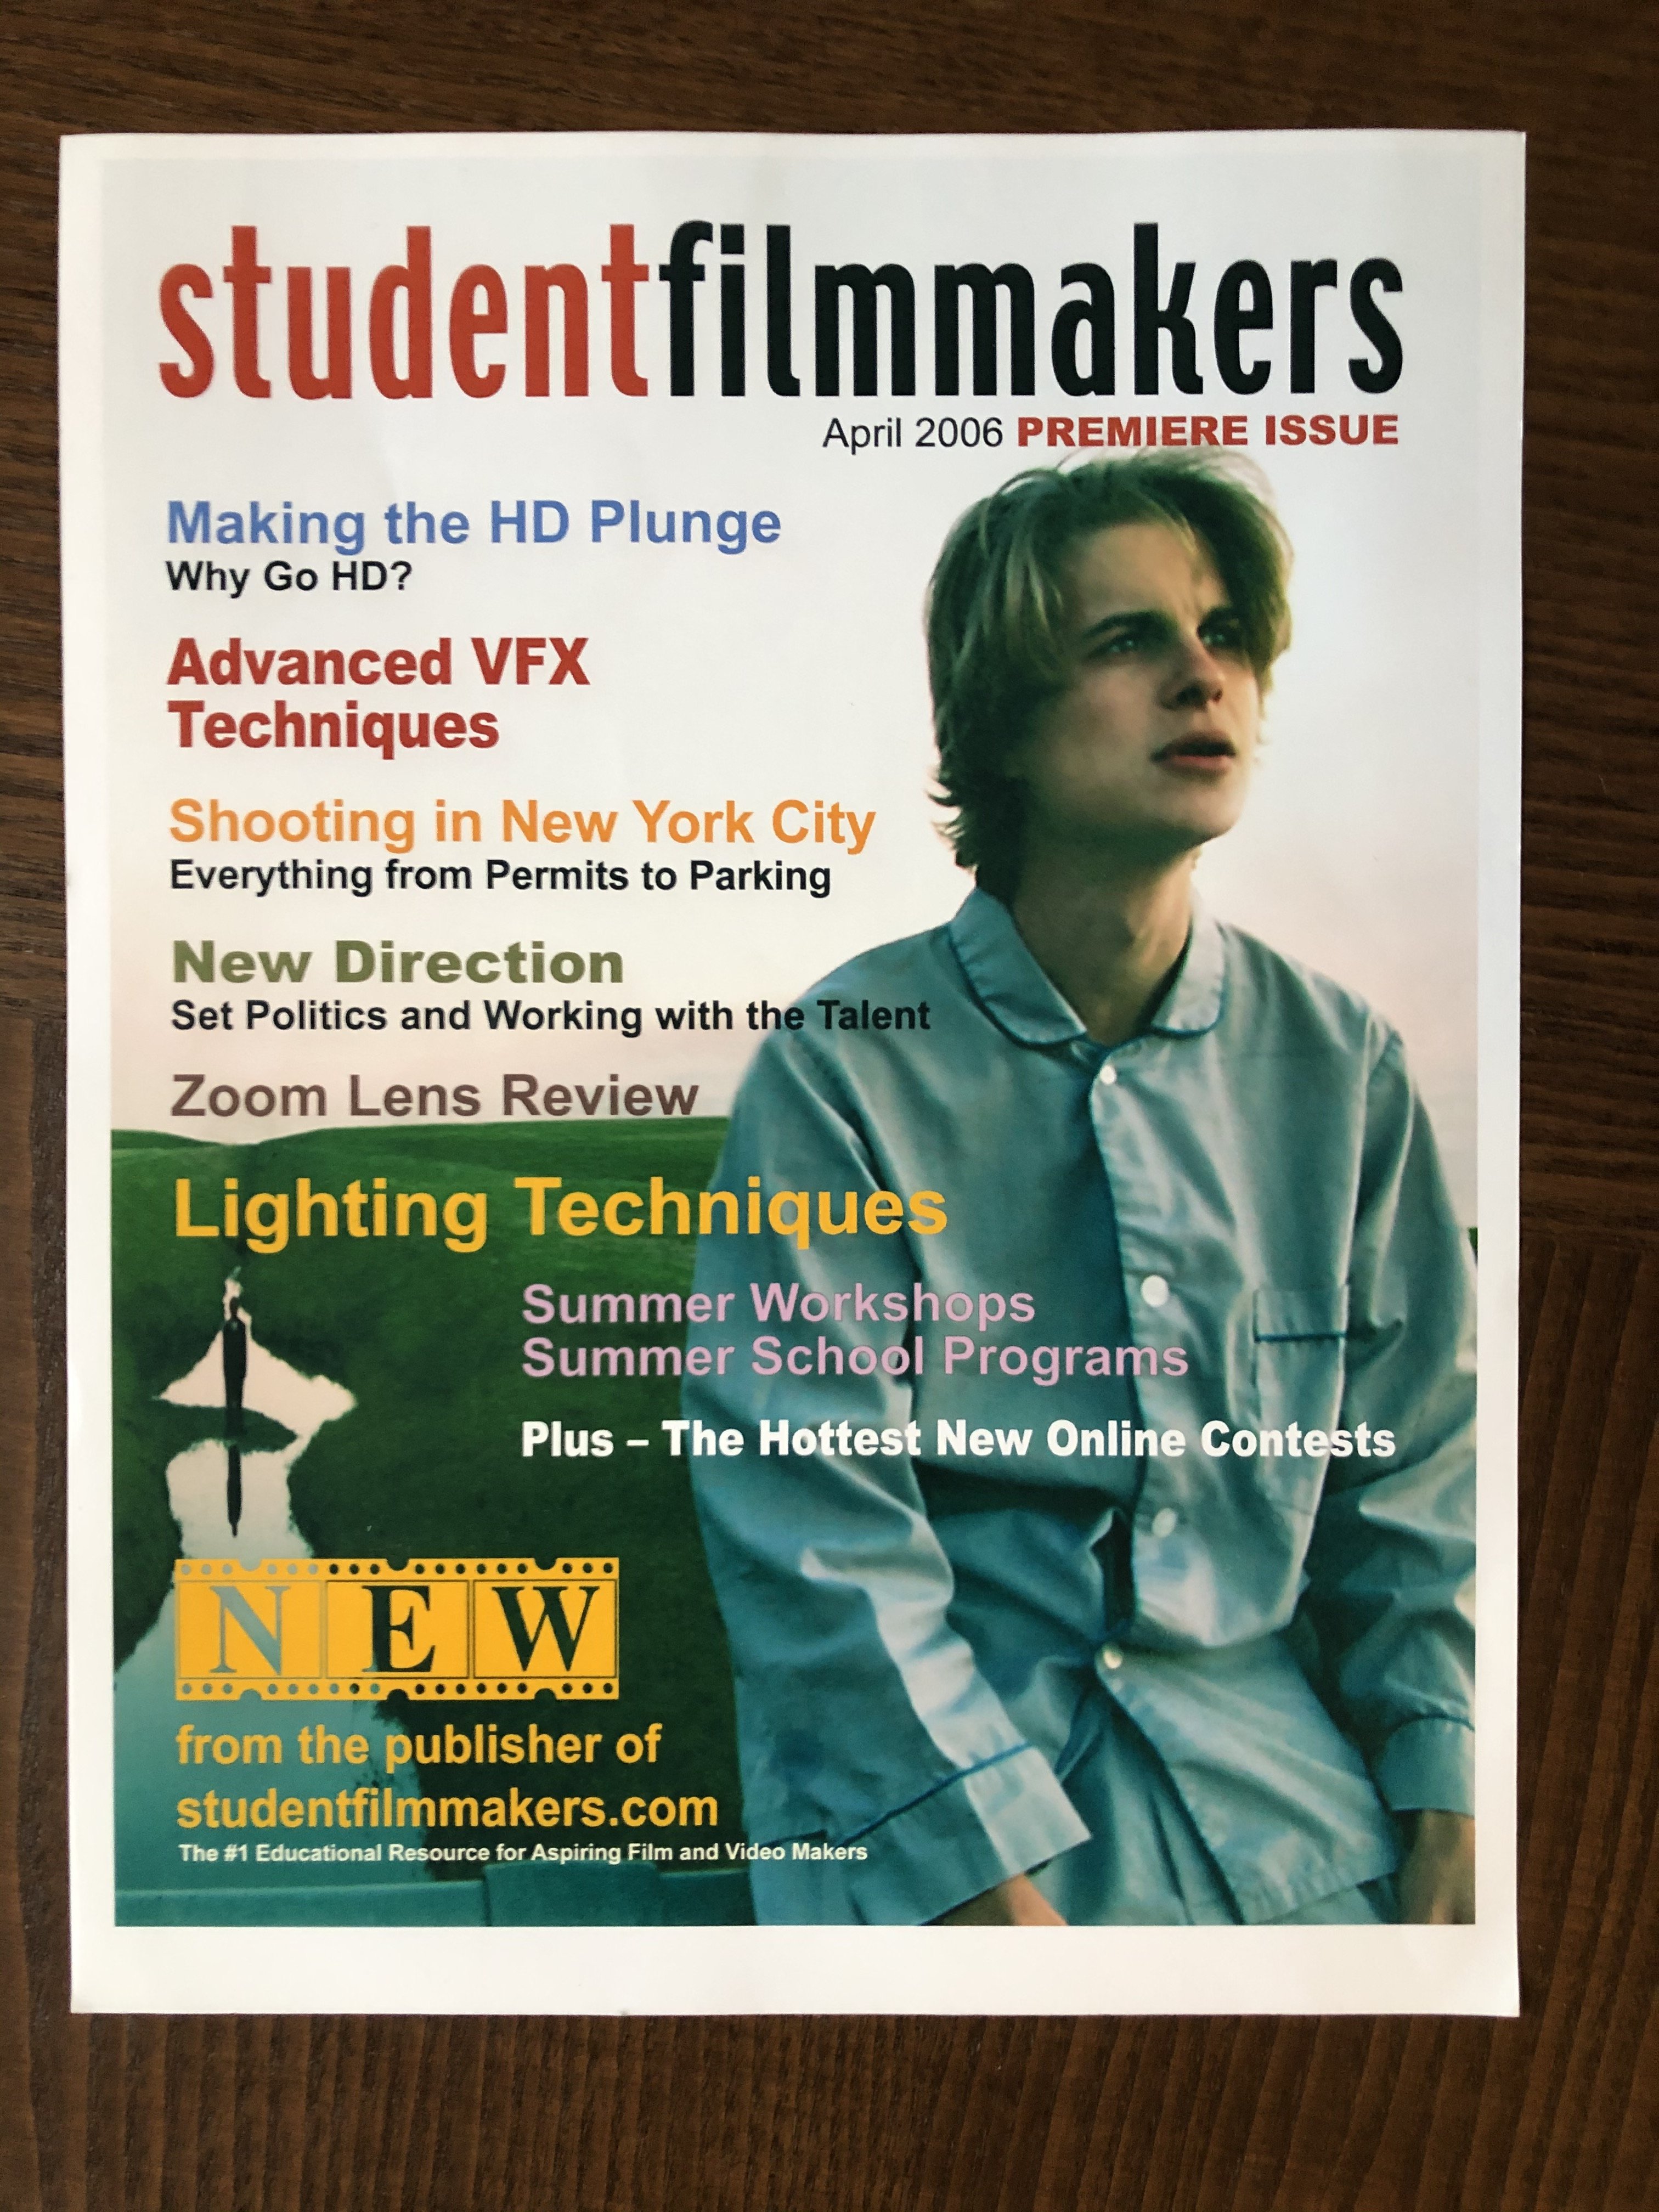 studentfilmmakers-first-magazine-cover.jpg